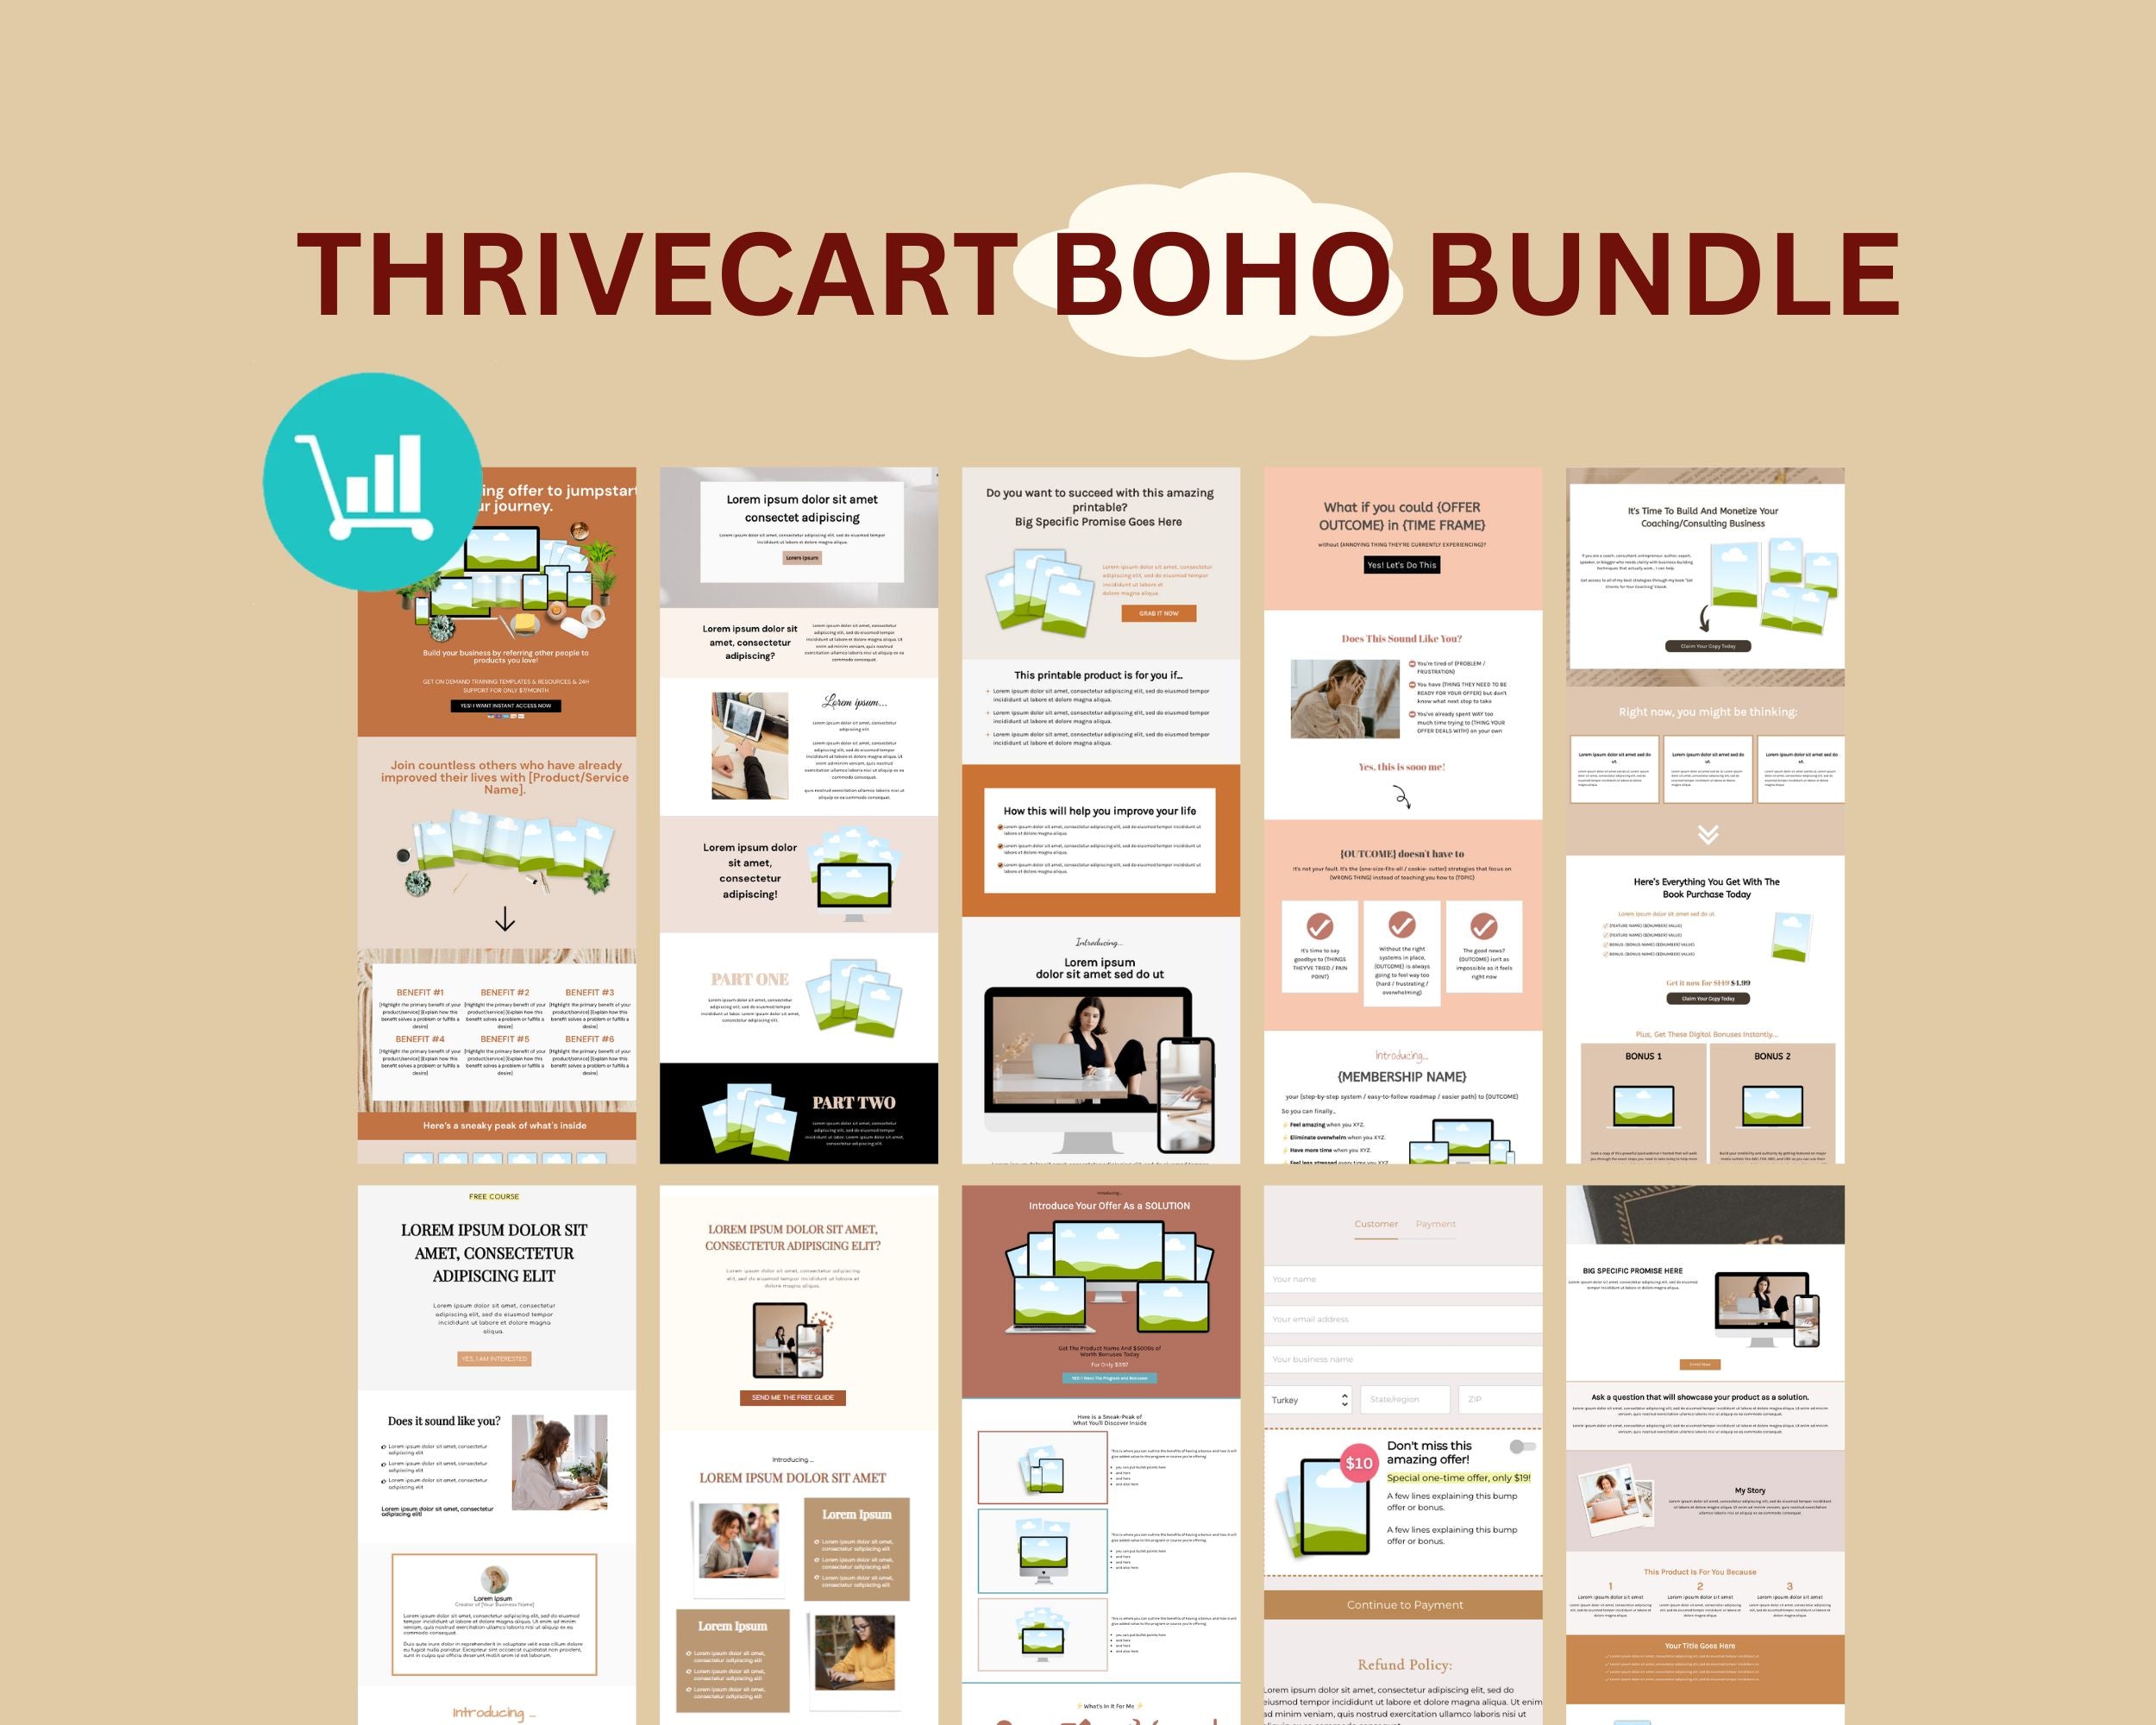 ThriveCart Boho Bundle Templates